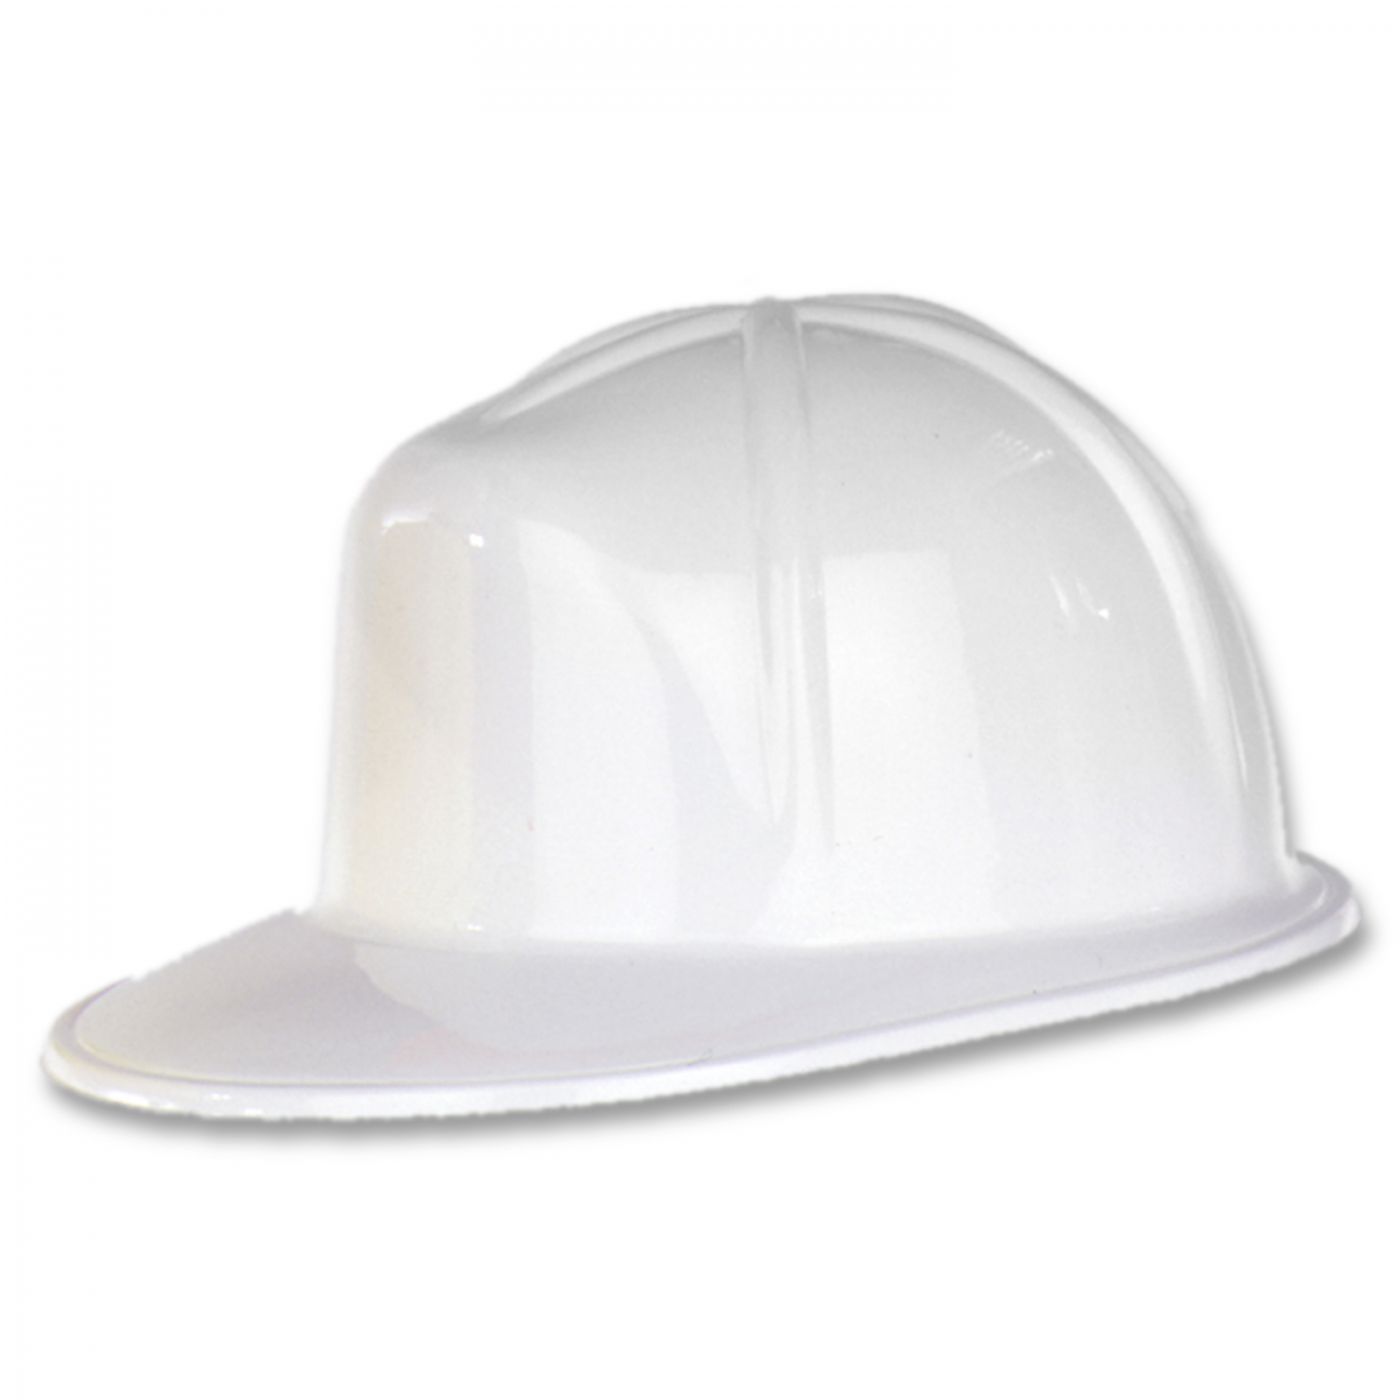 White Plastic Construction Helmet (48) image